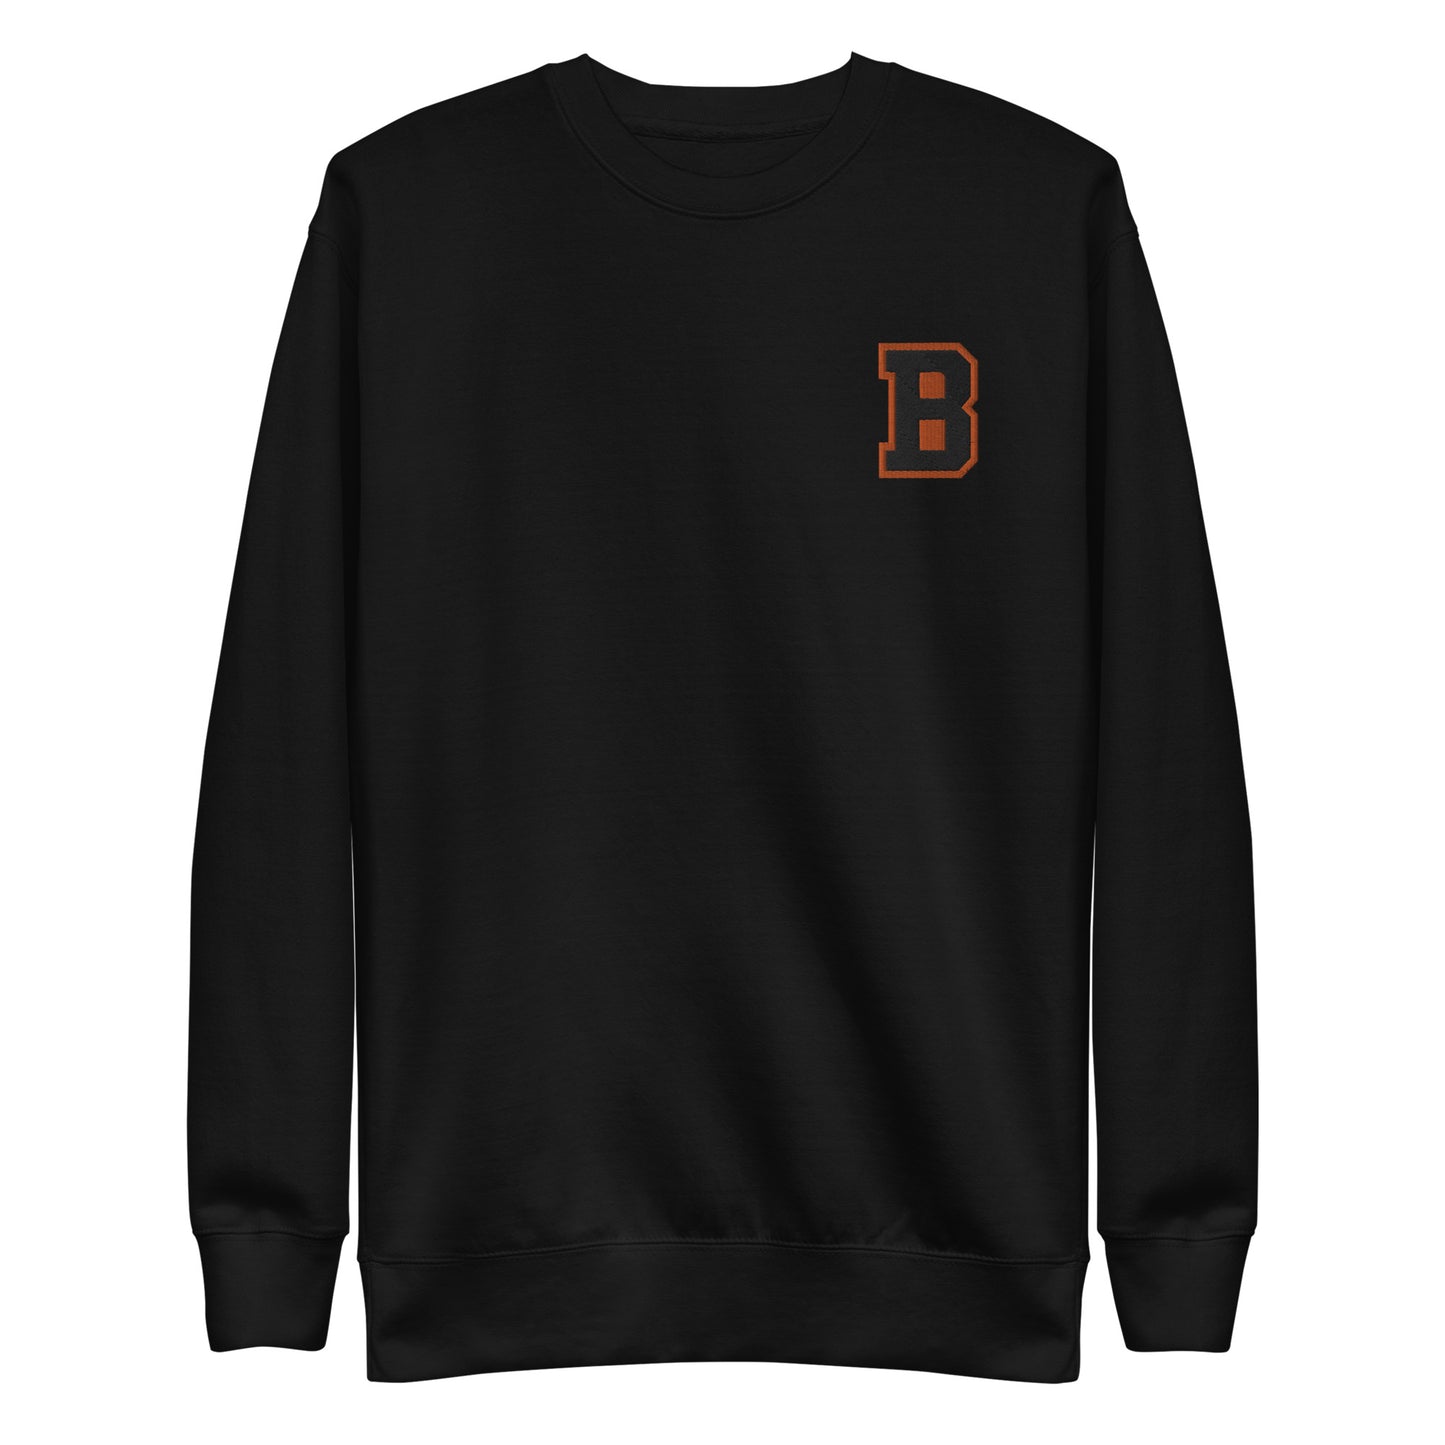 WBLHSB B Sweatshirt